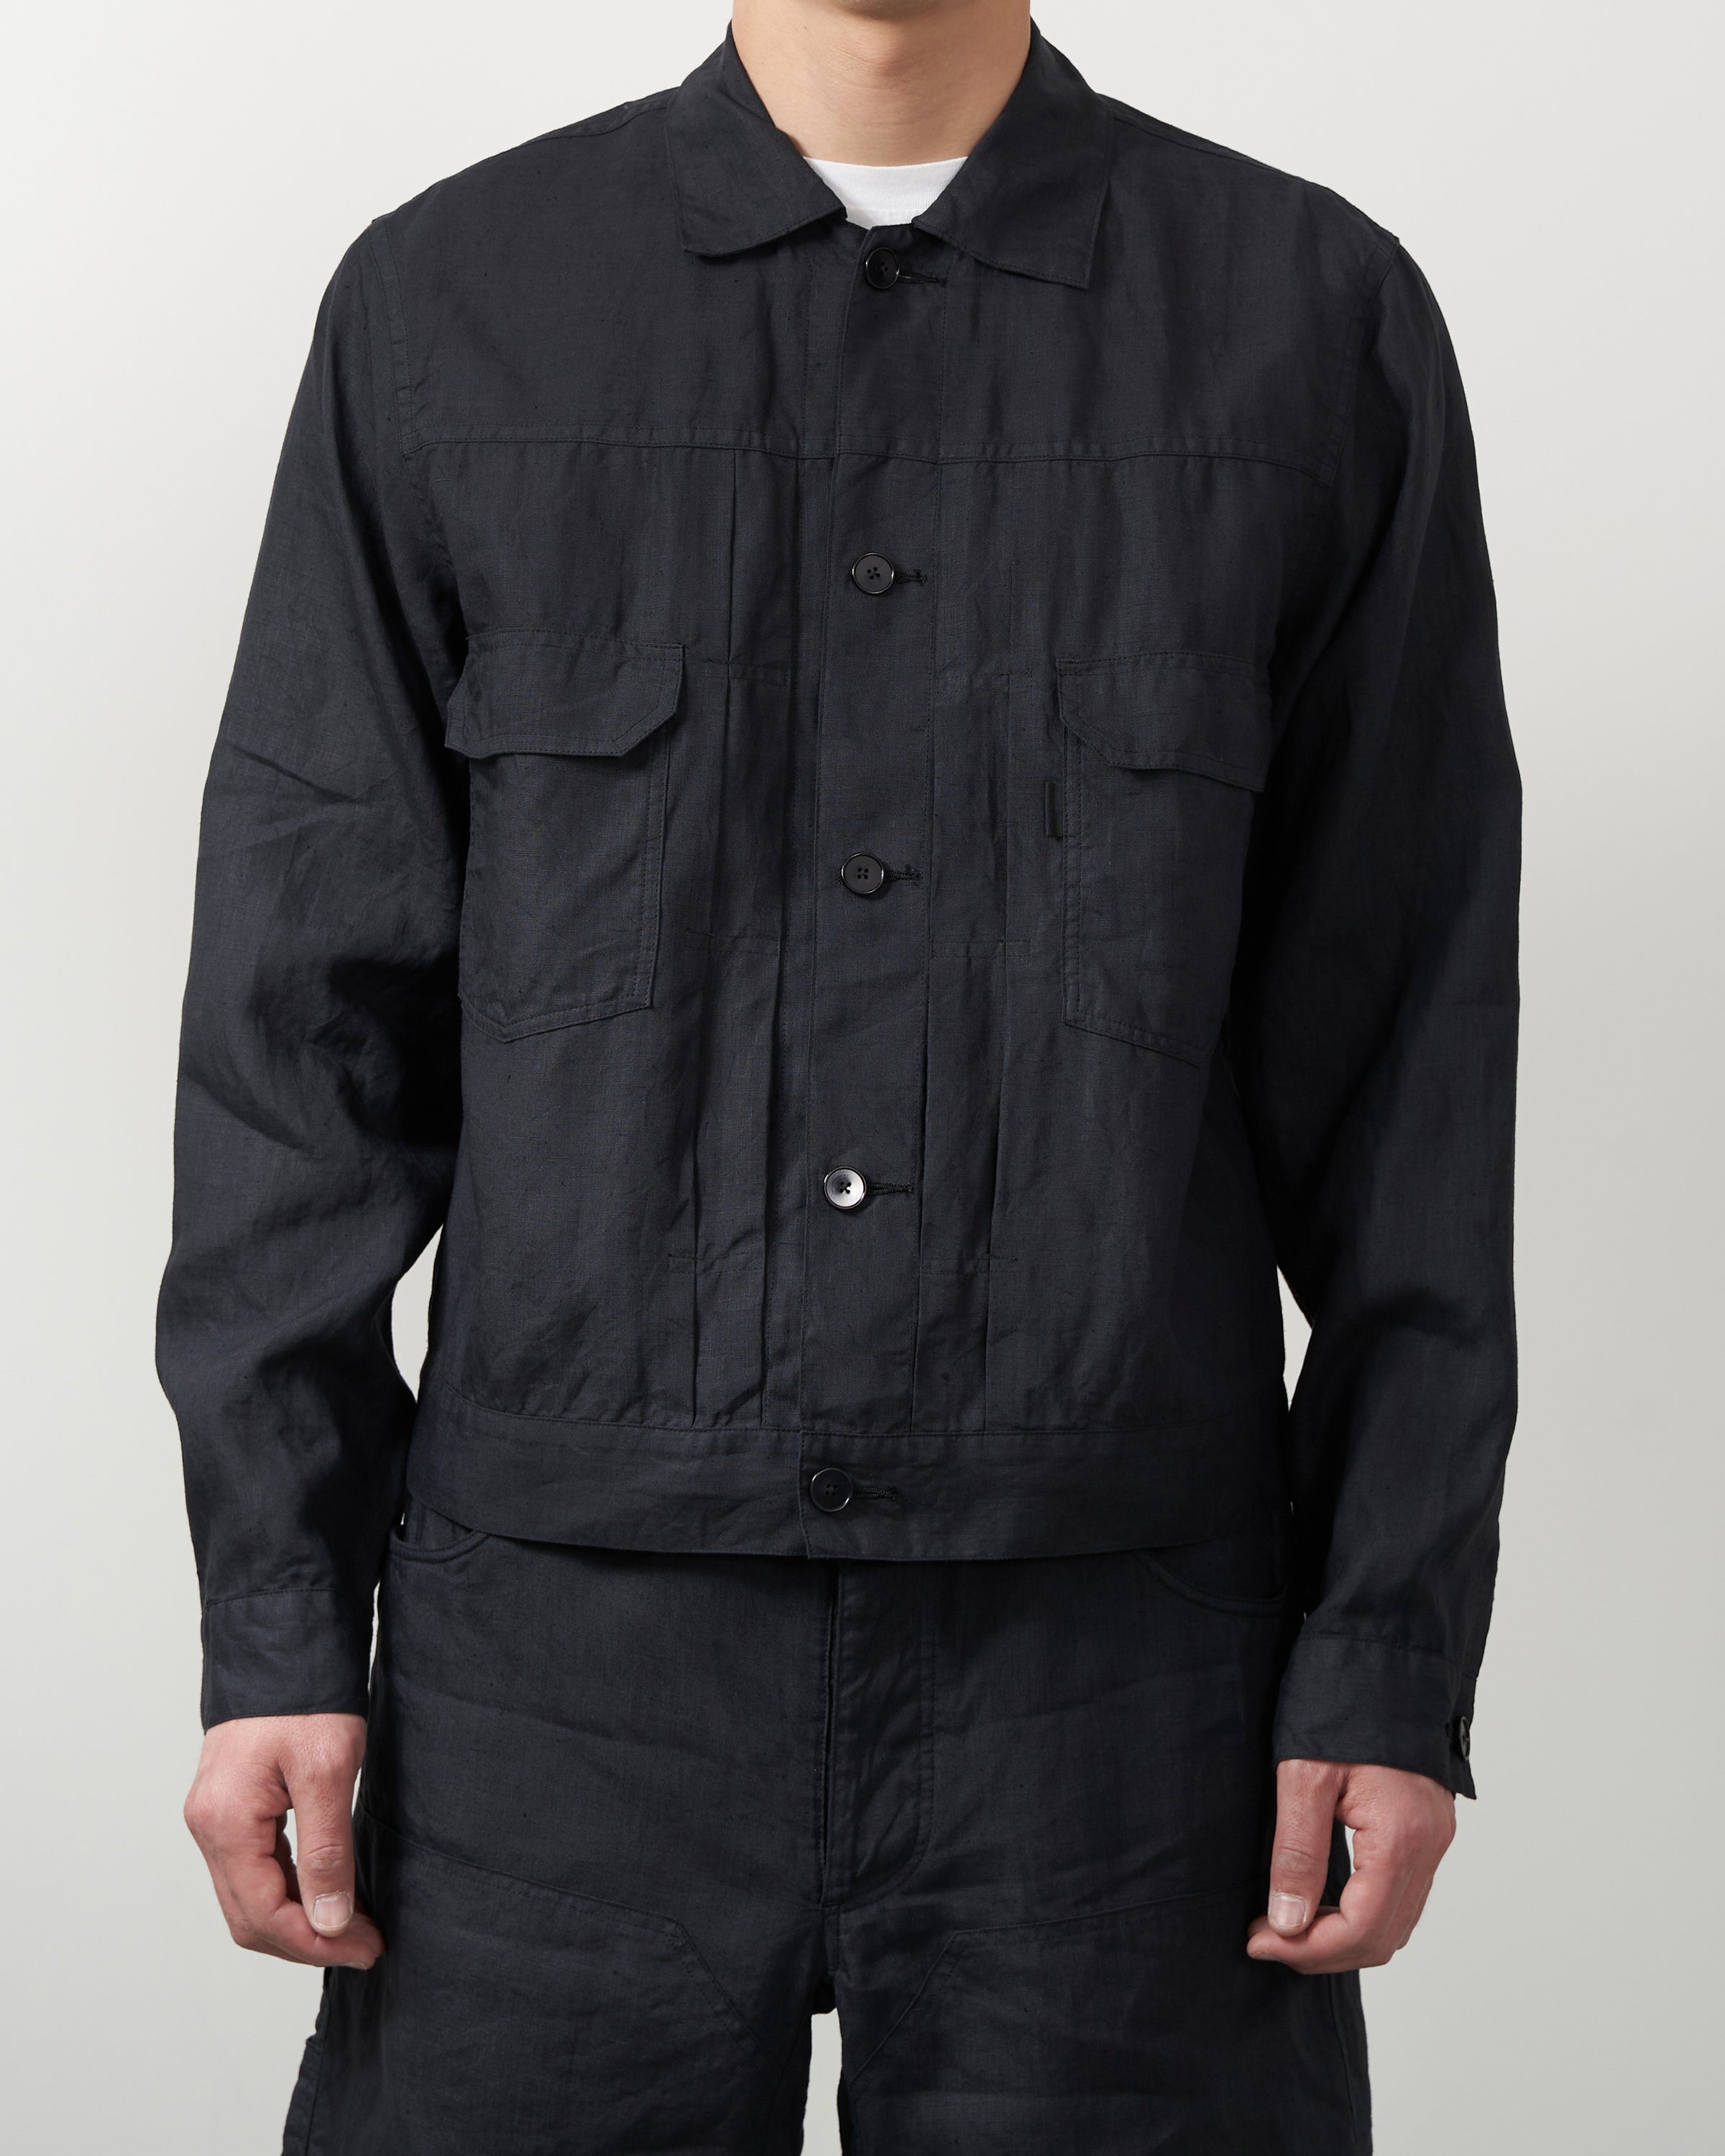 S H LVND-004 Trucker Shirt(Linen Garment Dye), Ink Black